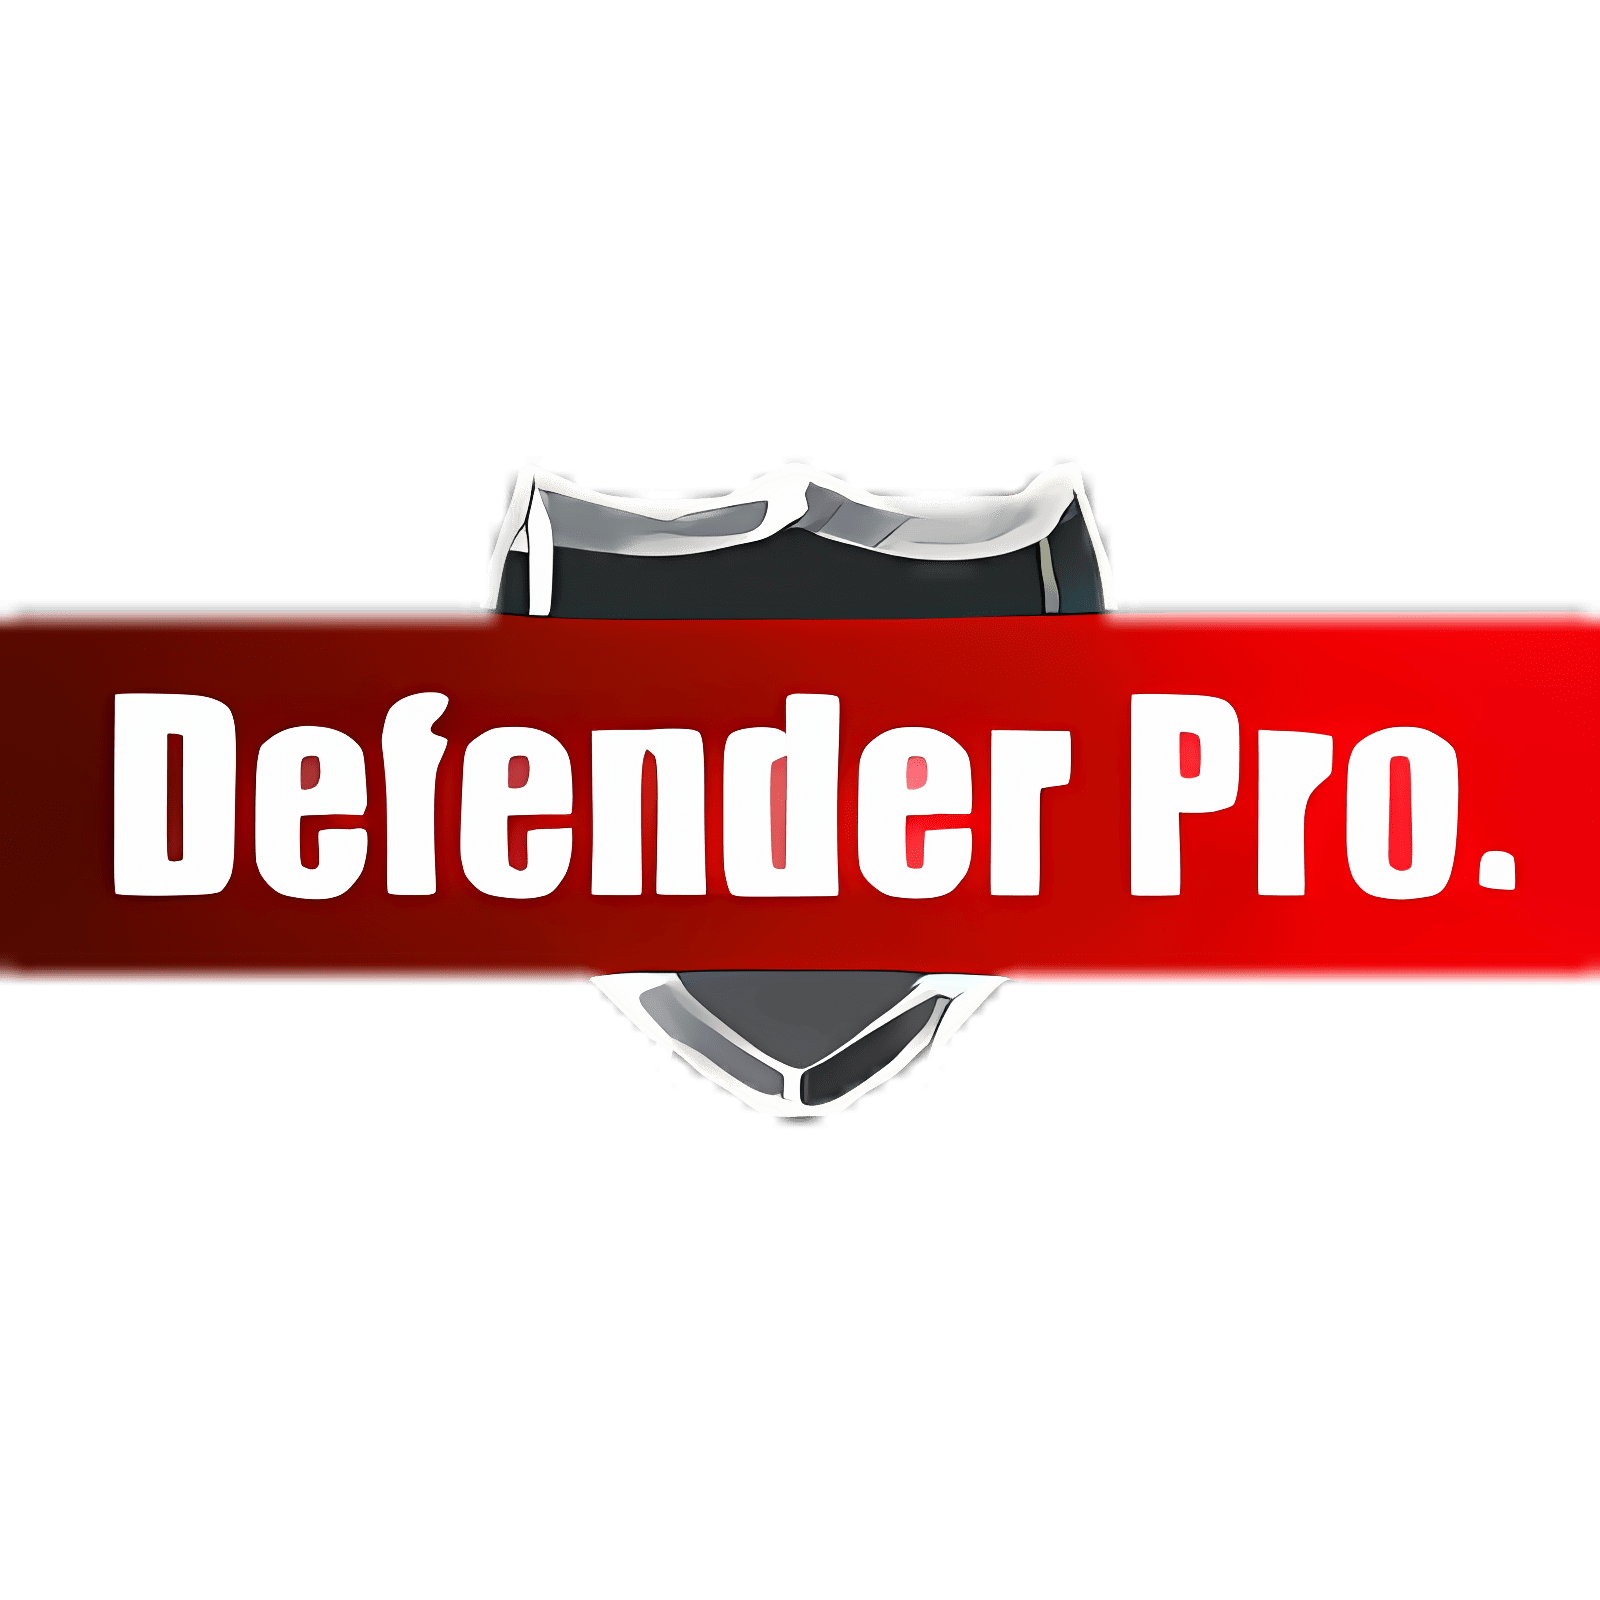 defender antivirus free